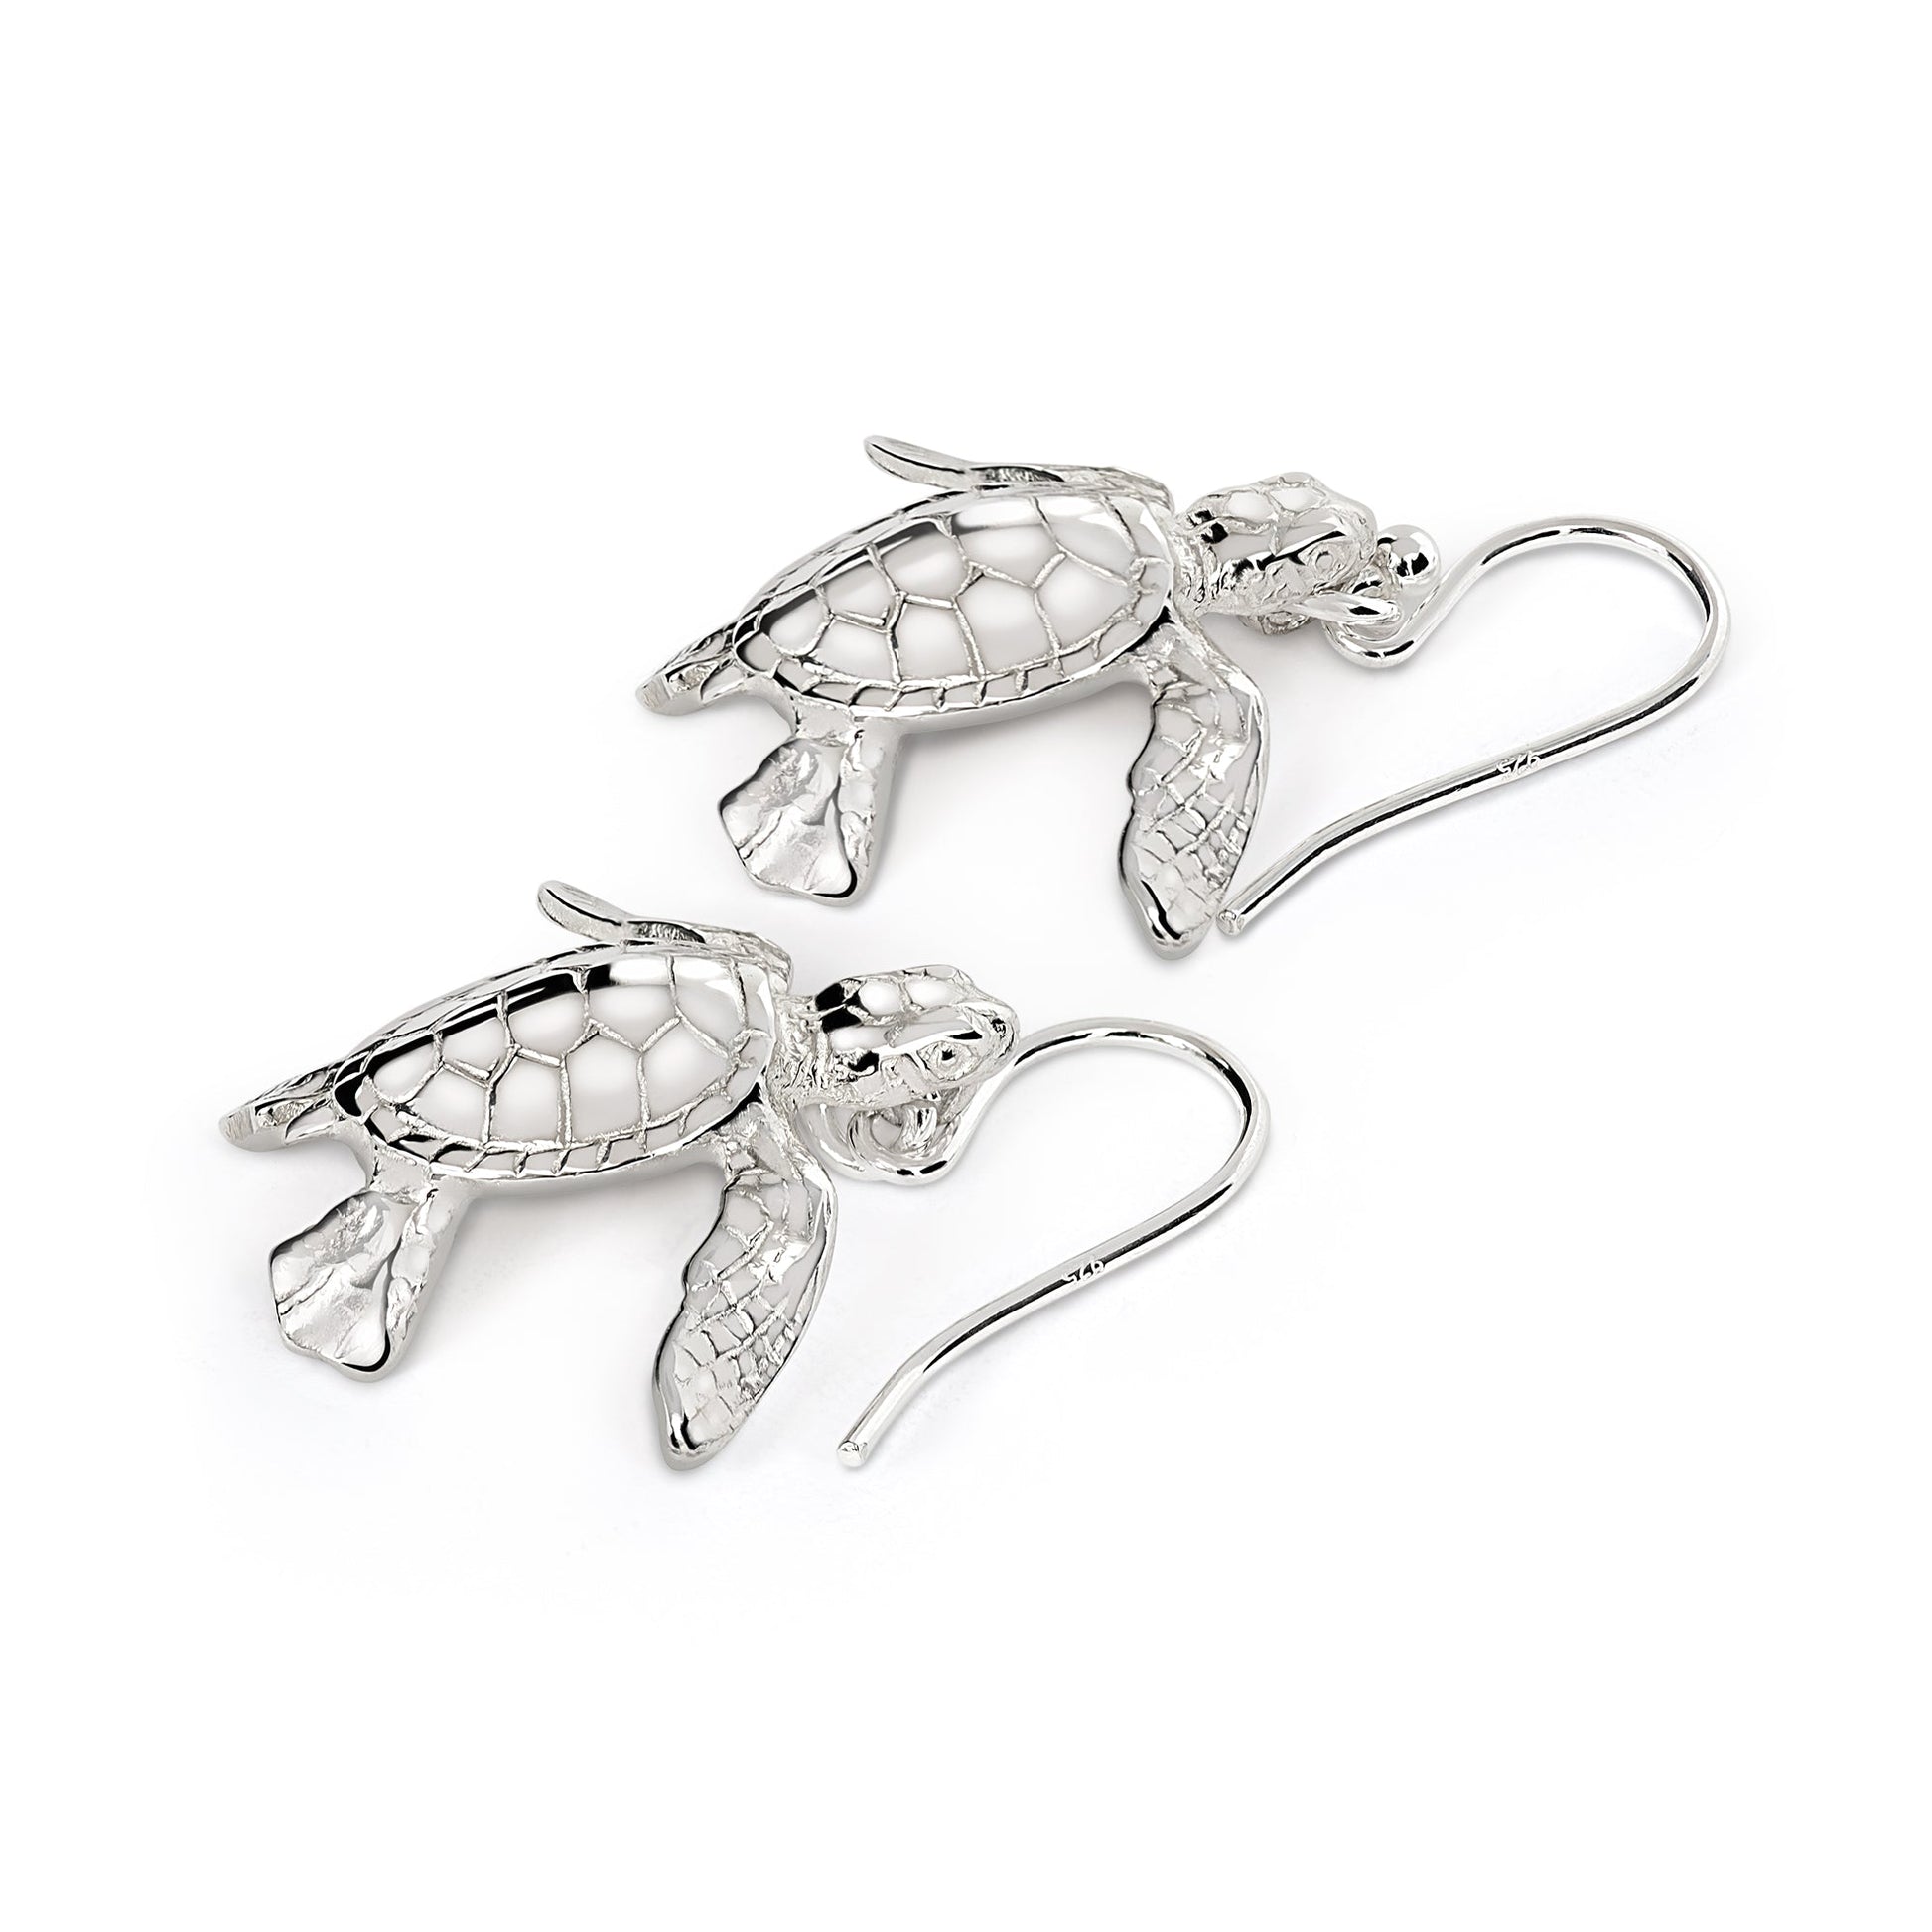 Turtle Earrings Sterling Silver- Sea Turtle Drop Earrings, Sea Turtle Gift for Women, Sterling Silver Turtle Dangle Earrings, Gifts for Turtle Lovers - The Tool Store